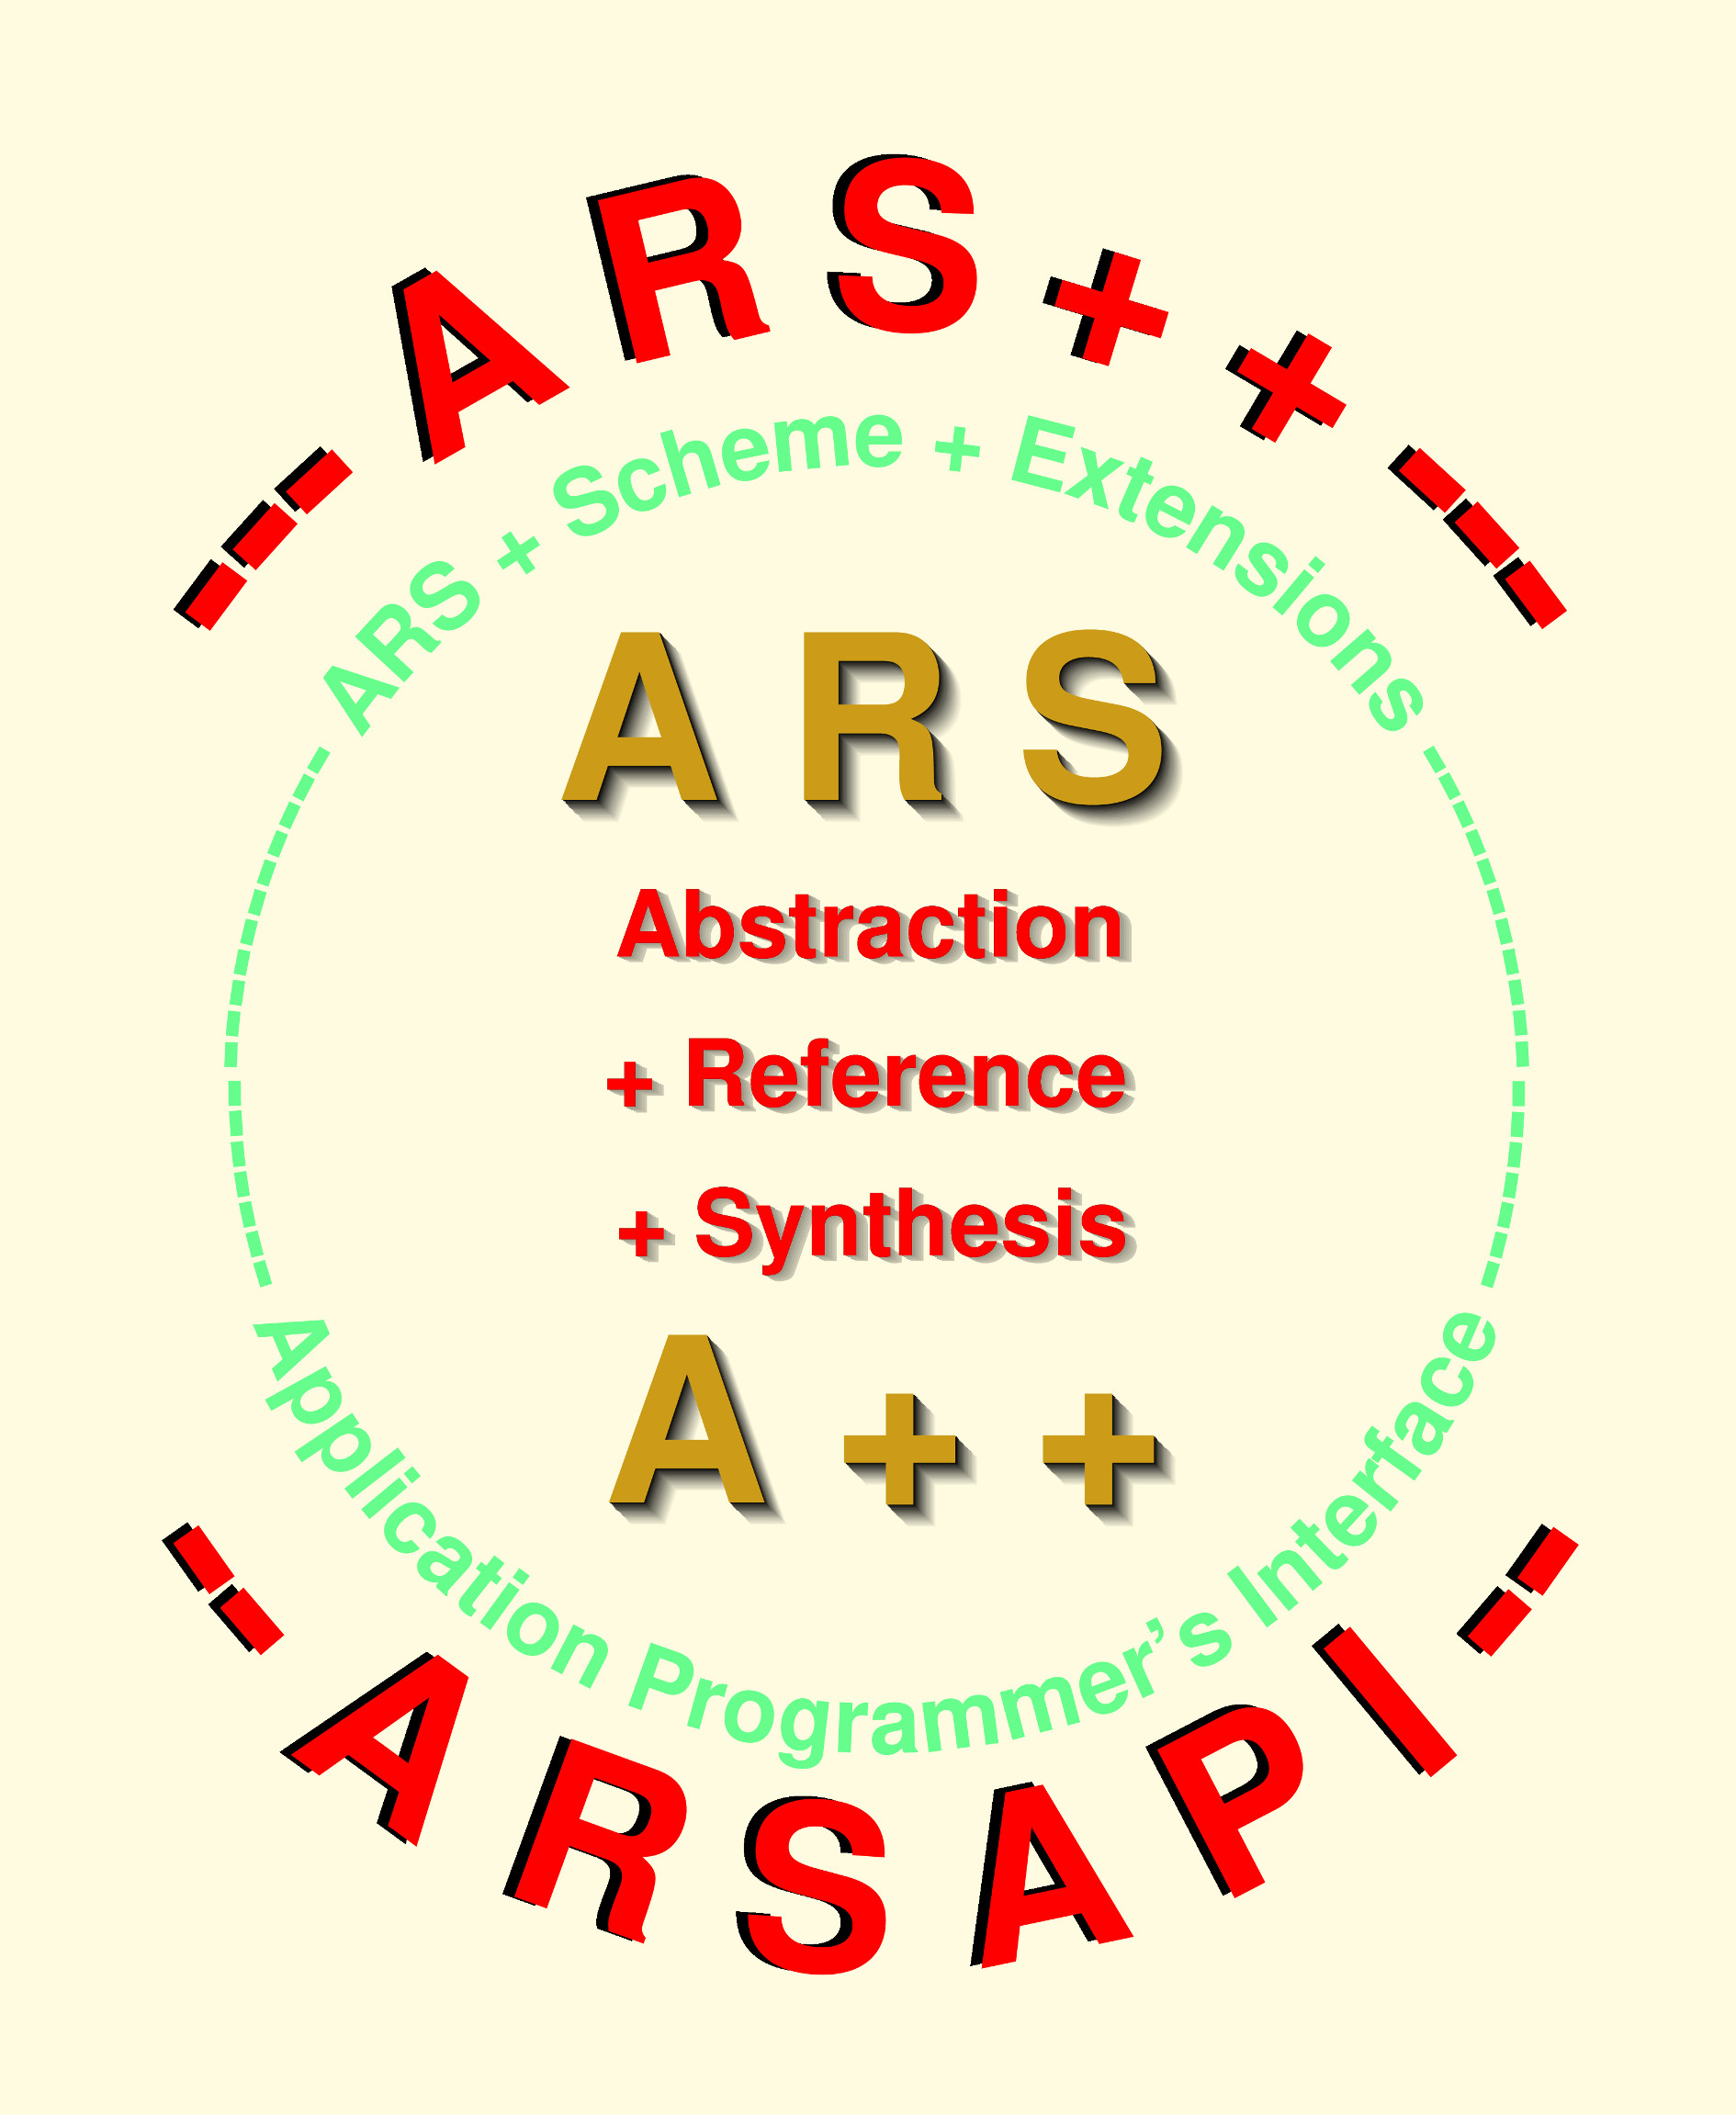 ARSIP, ARS++, A++, ACOMP, AVIM, Scheme, properly tail recursive,
full continuations